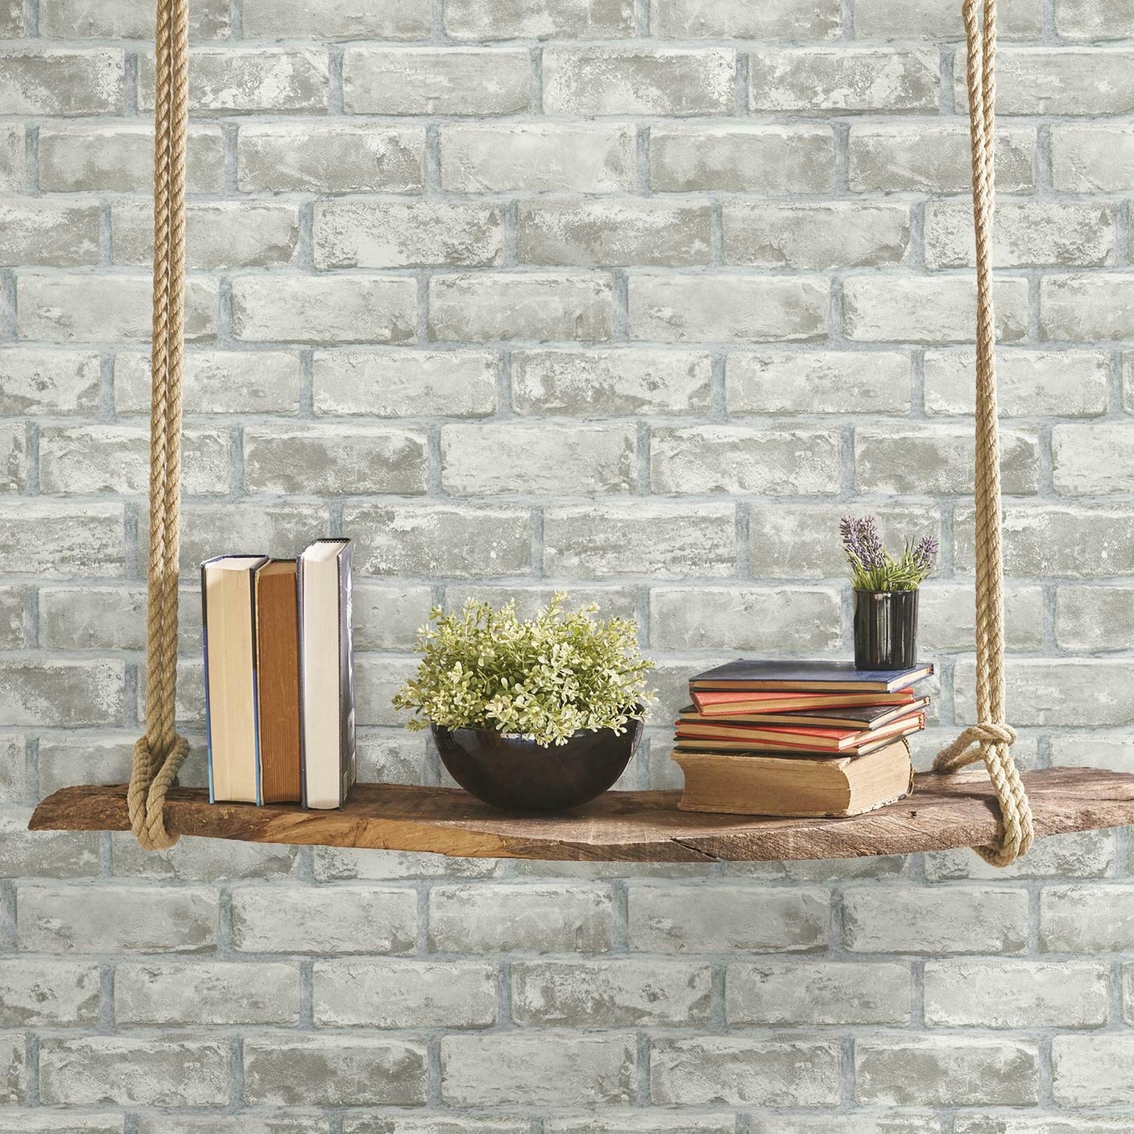 RoomMates Brick Peel and Stick Wallpaper - Image 4 of 7